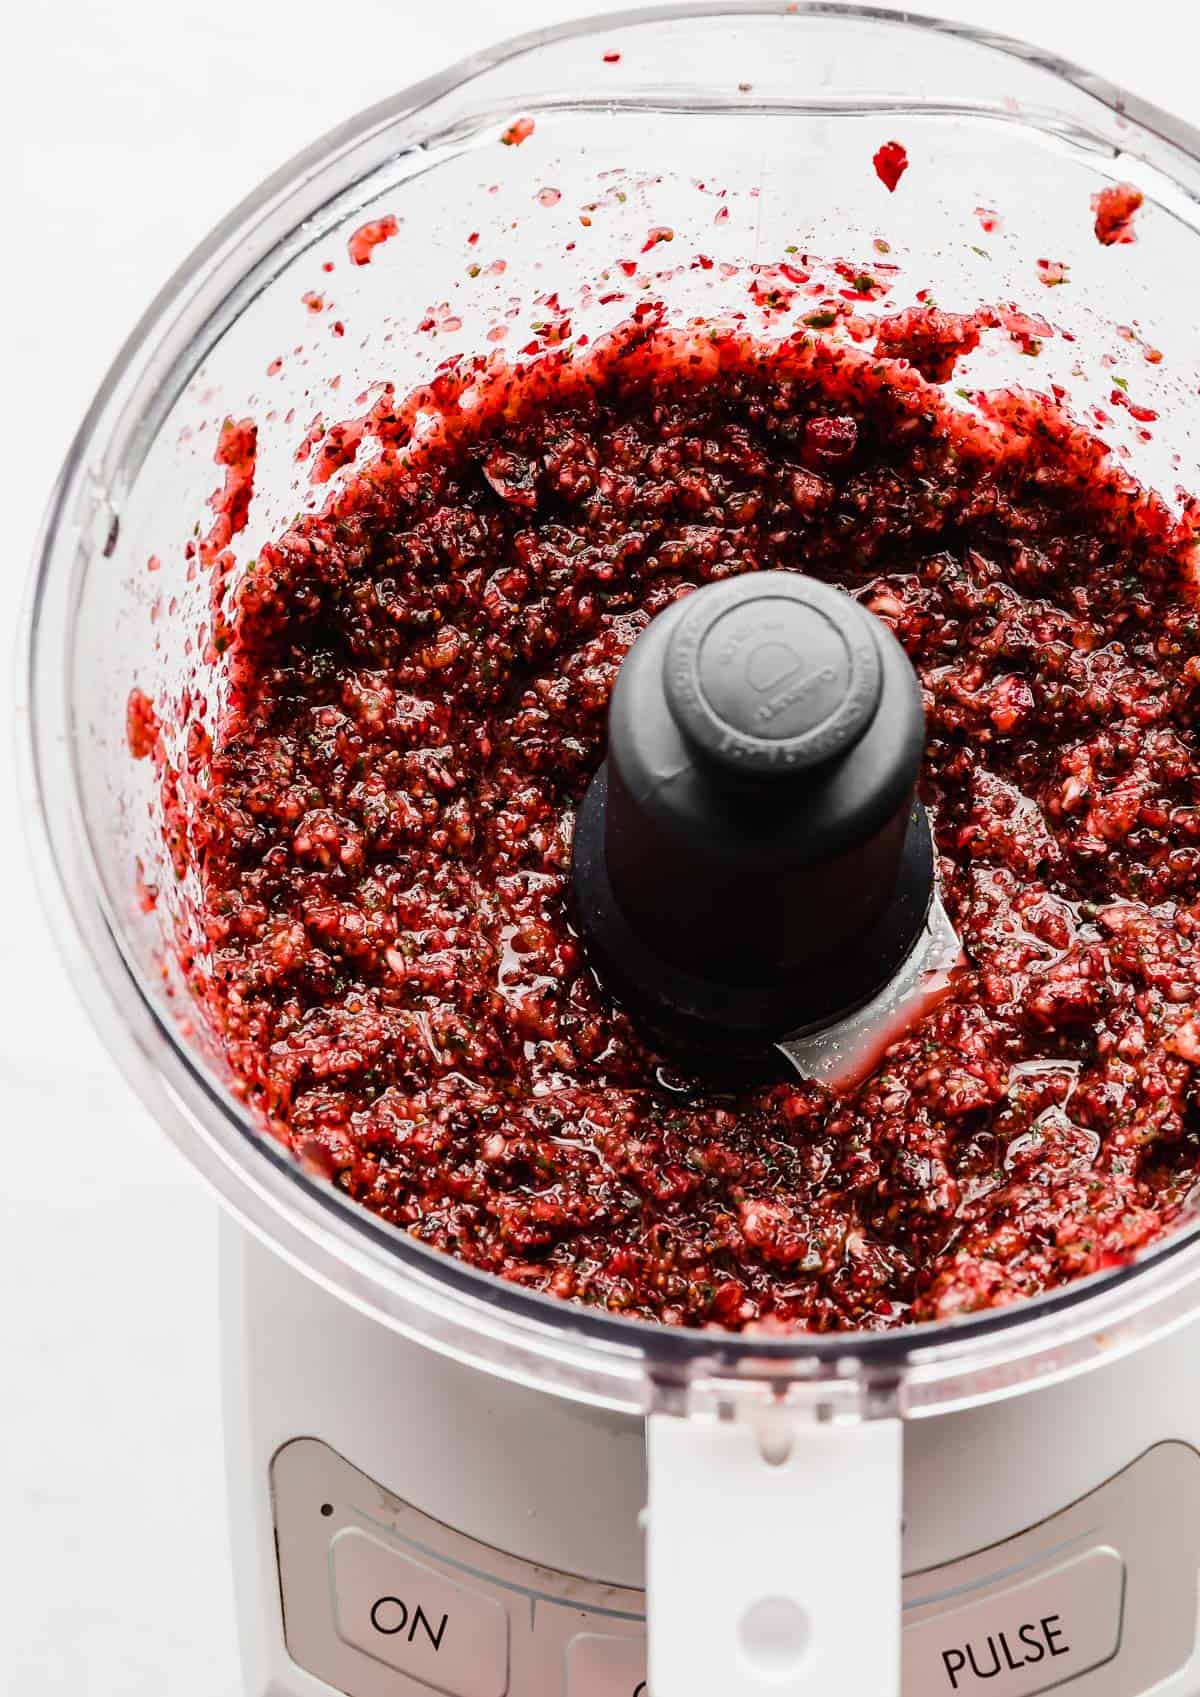 Pureed cranberry salsa in a food processor.